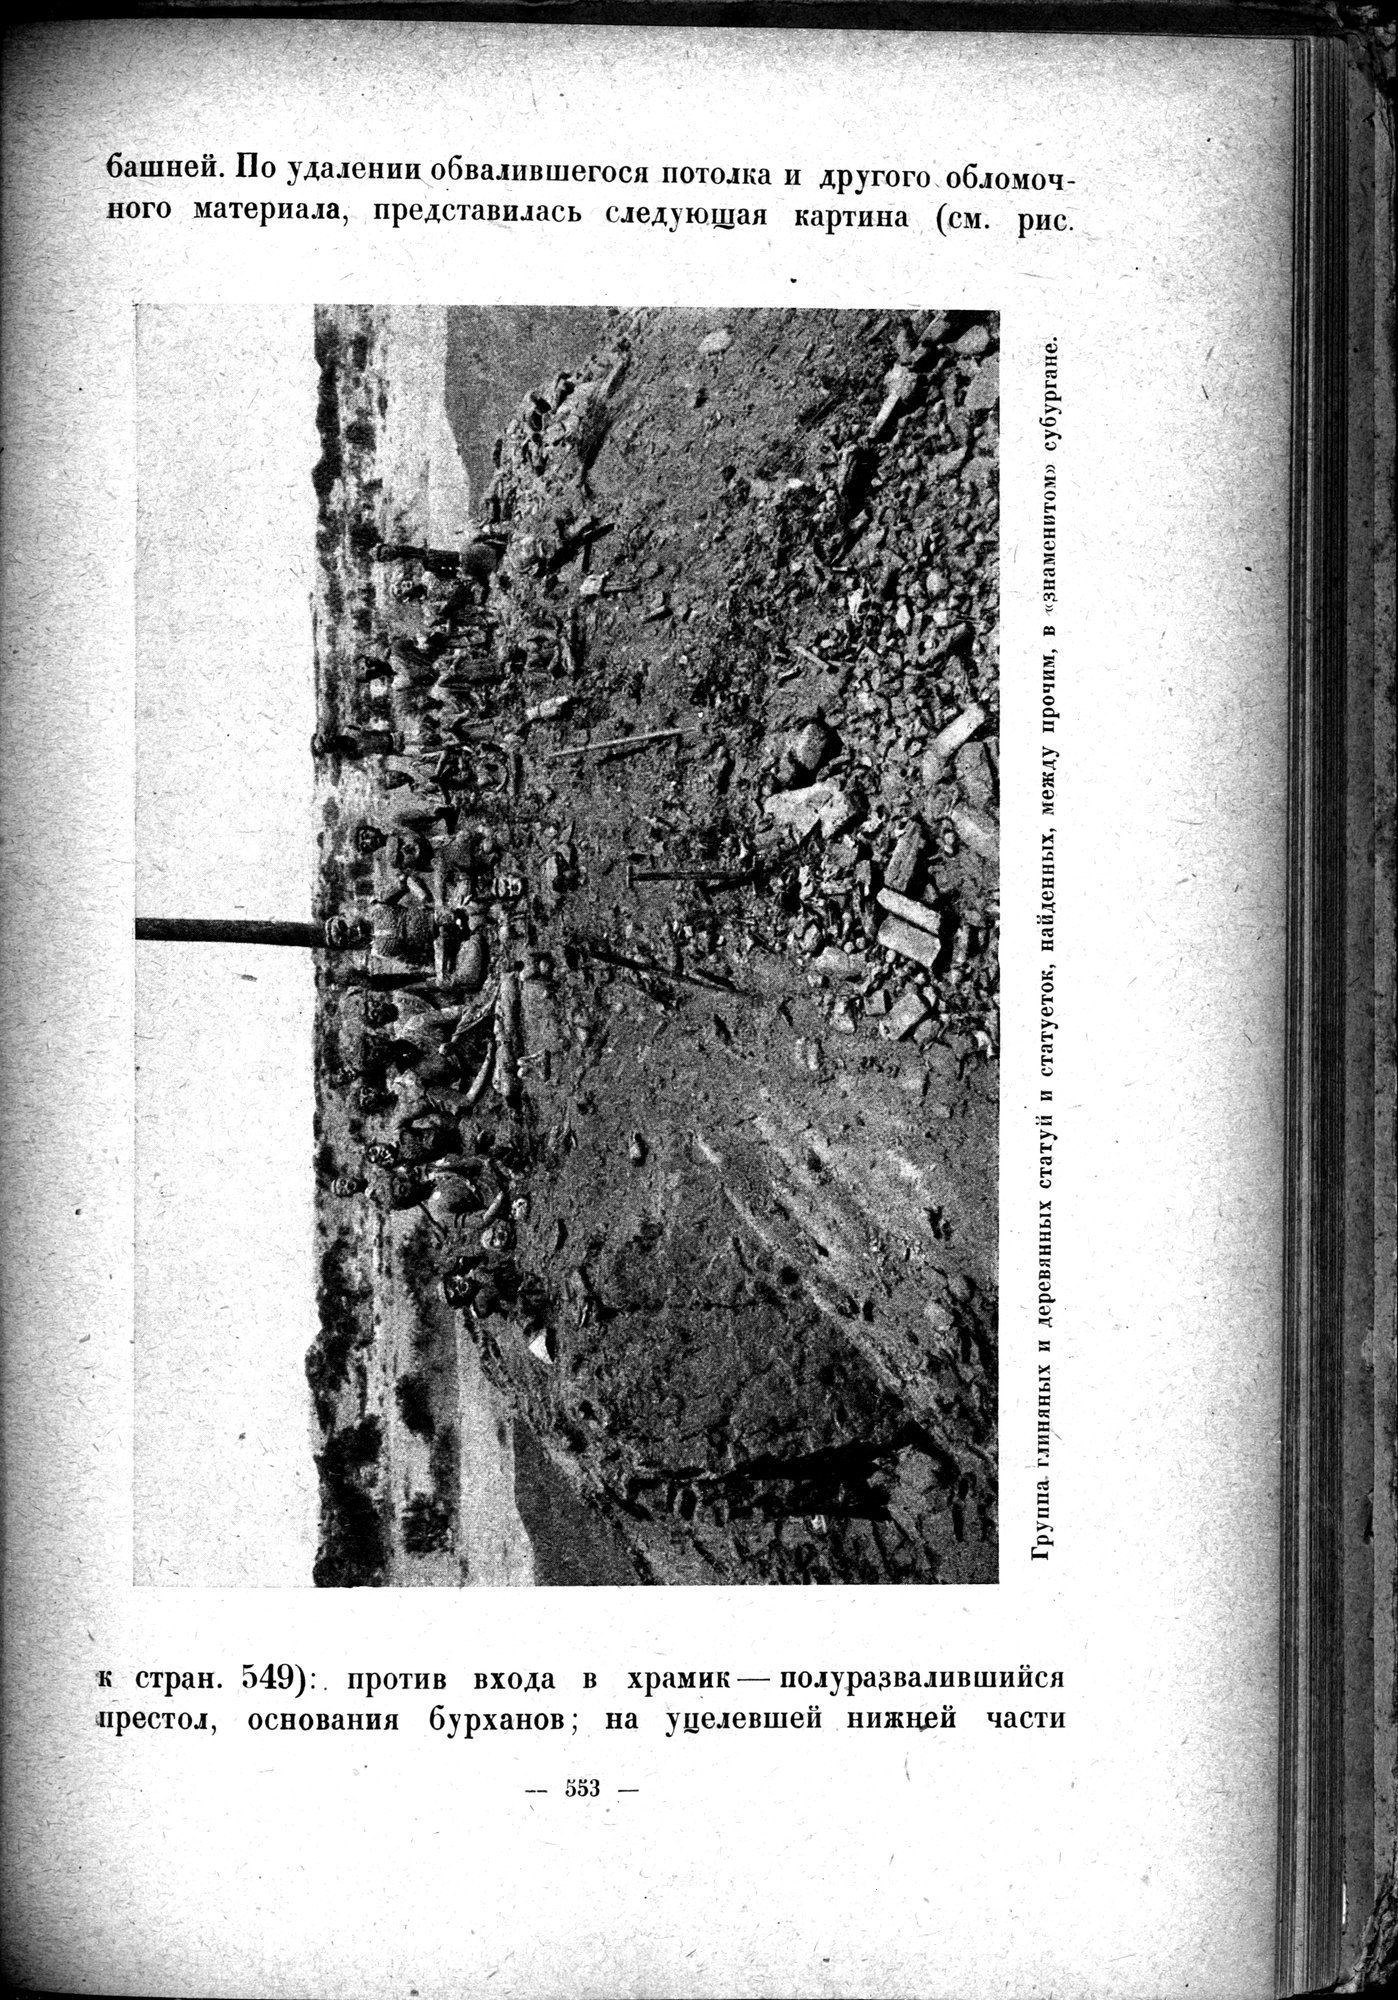 Mongoliya i Amdo i mertby gorod Khara-Khoto : vol.1 / Page 639 (Grayscale High Resolution Image)